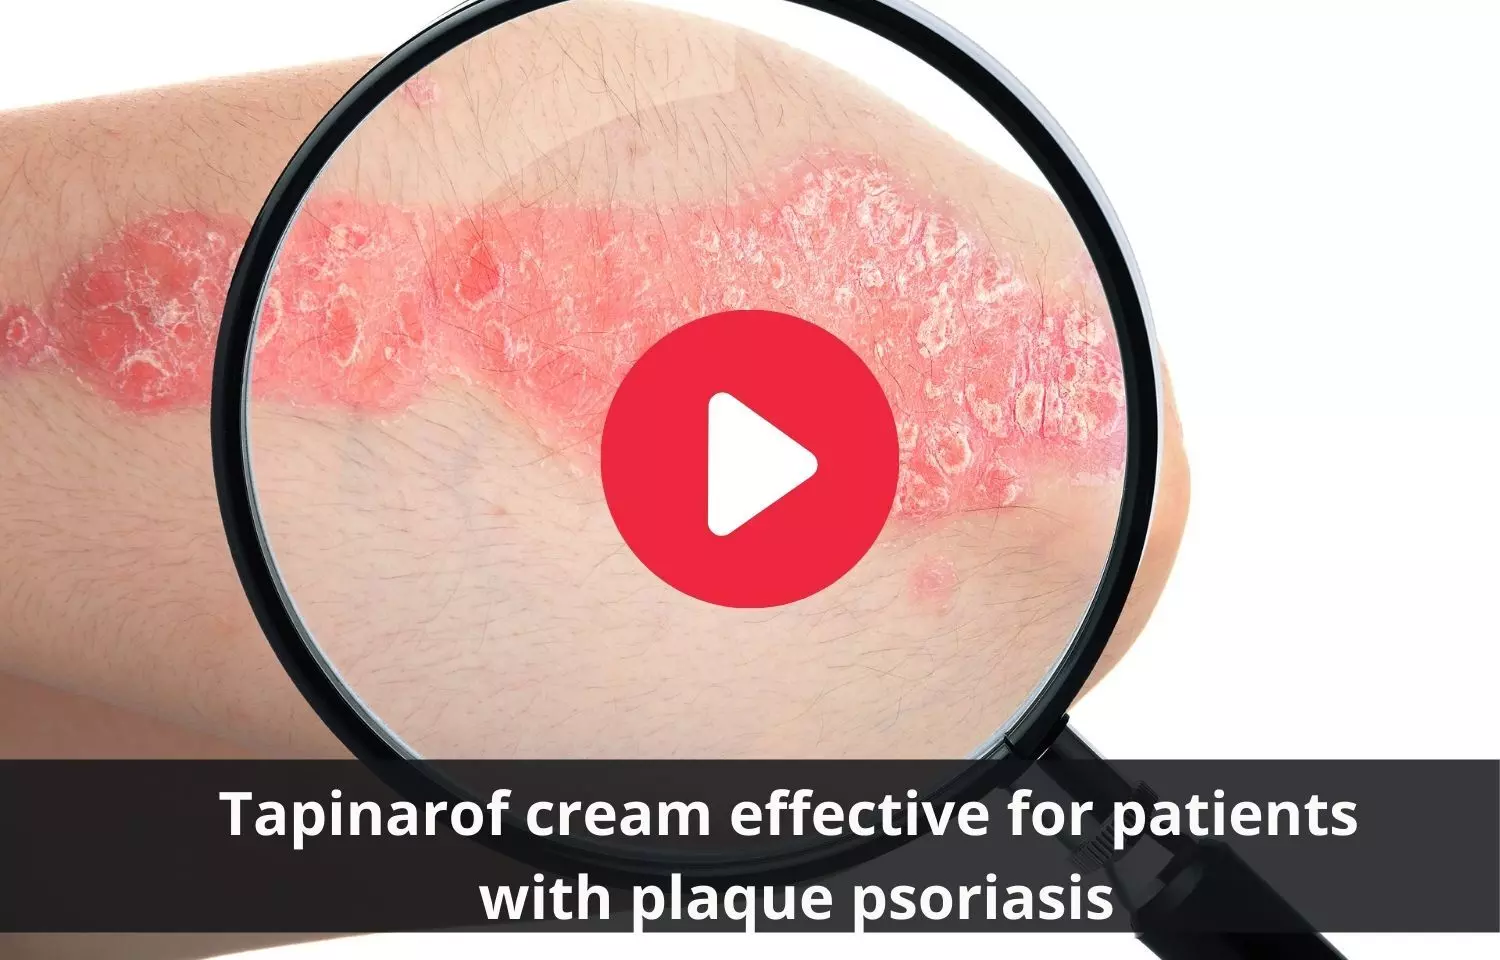 Tapinarof cream beneficial  for plaque psoriasis patients